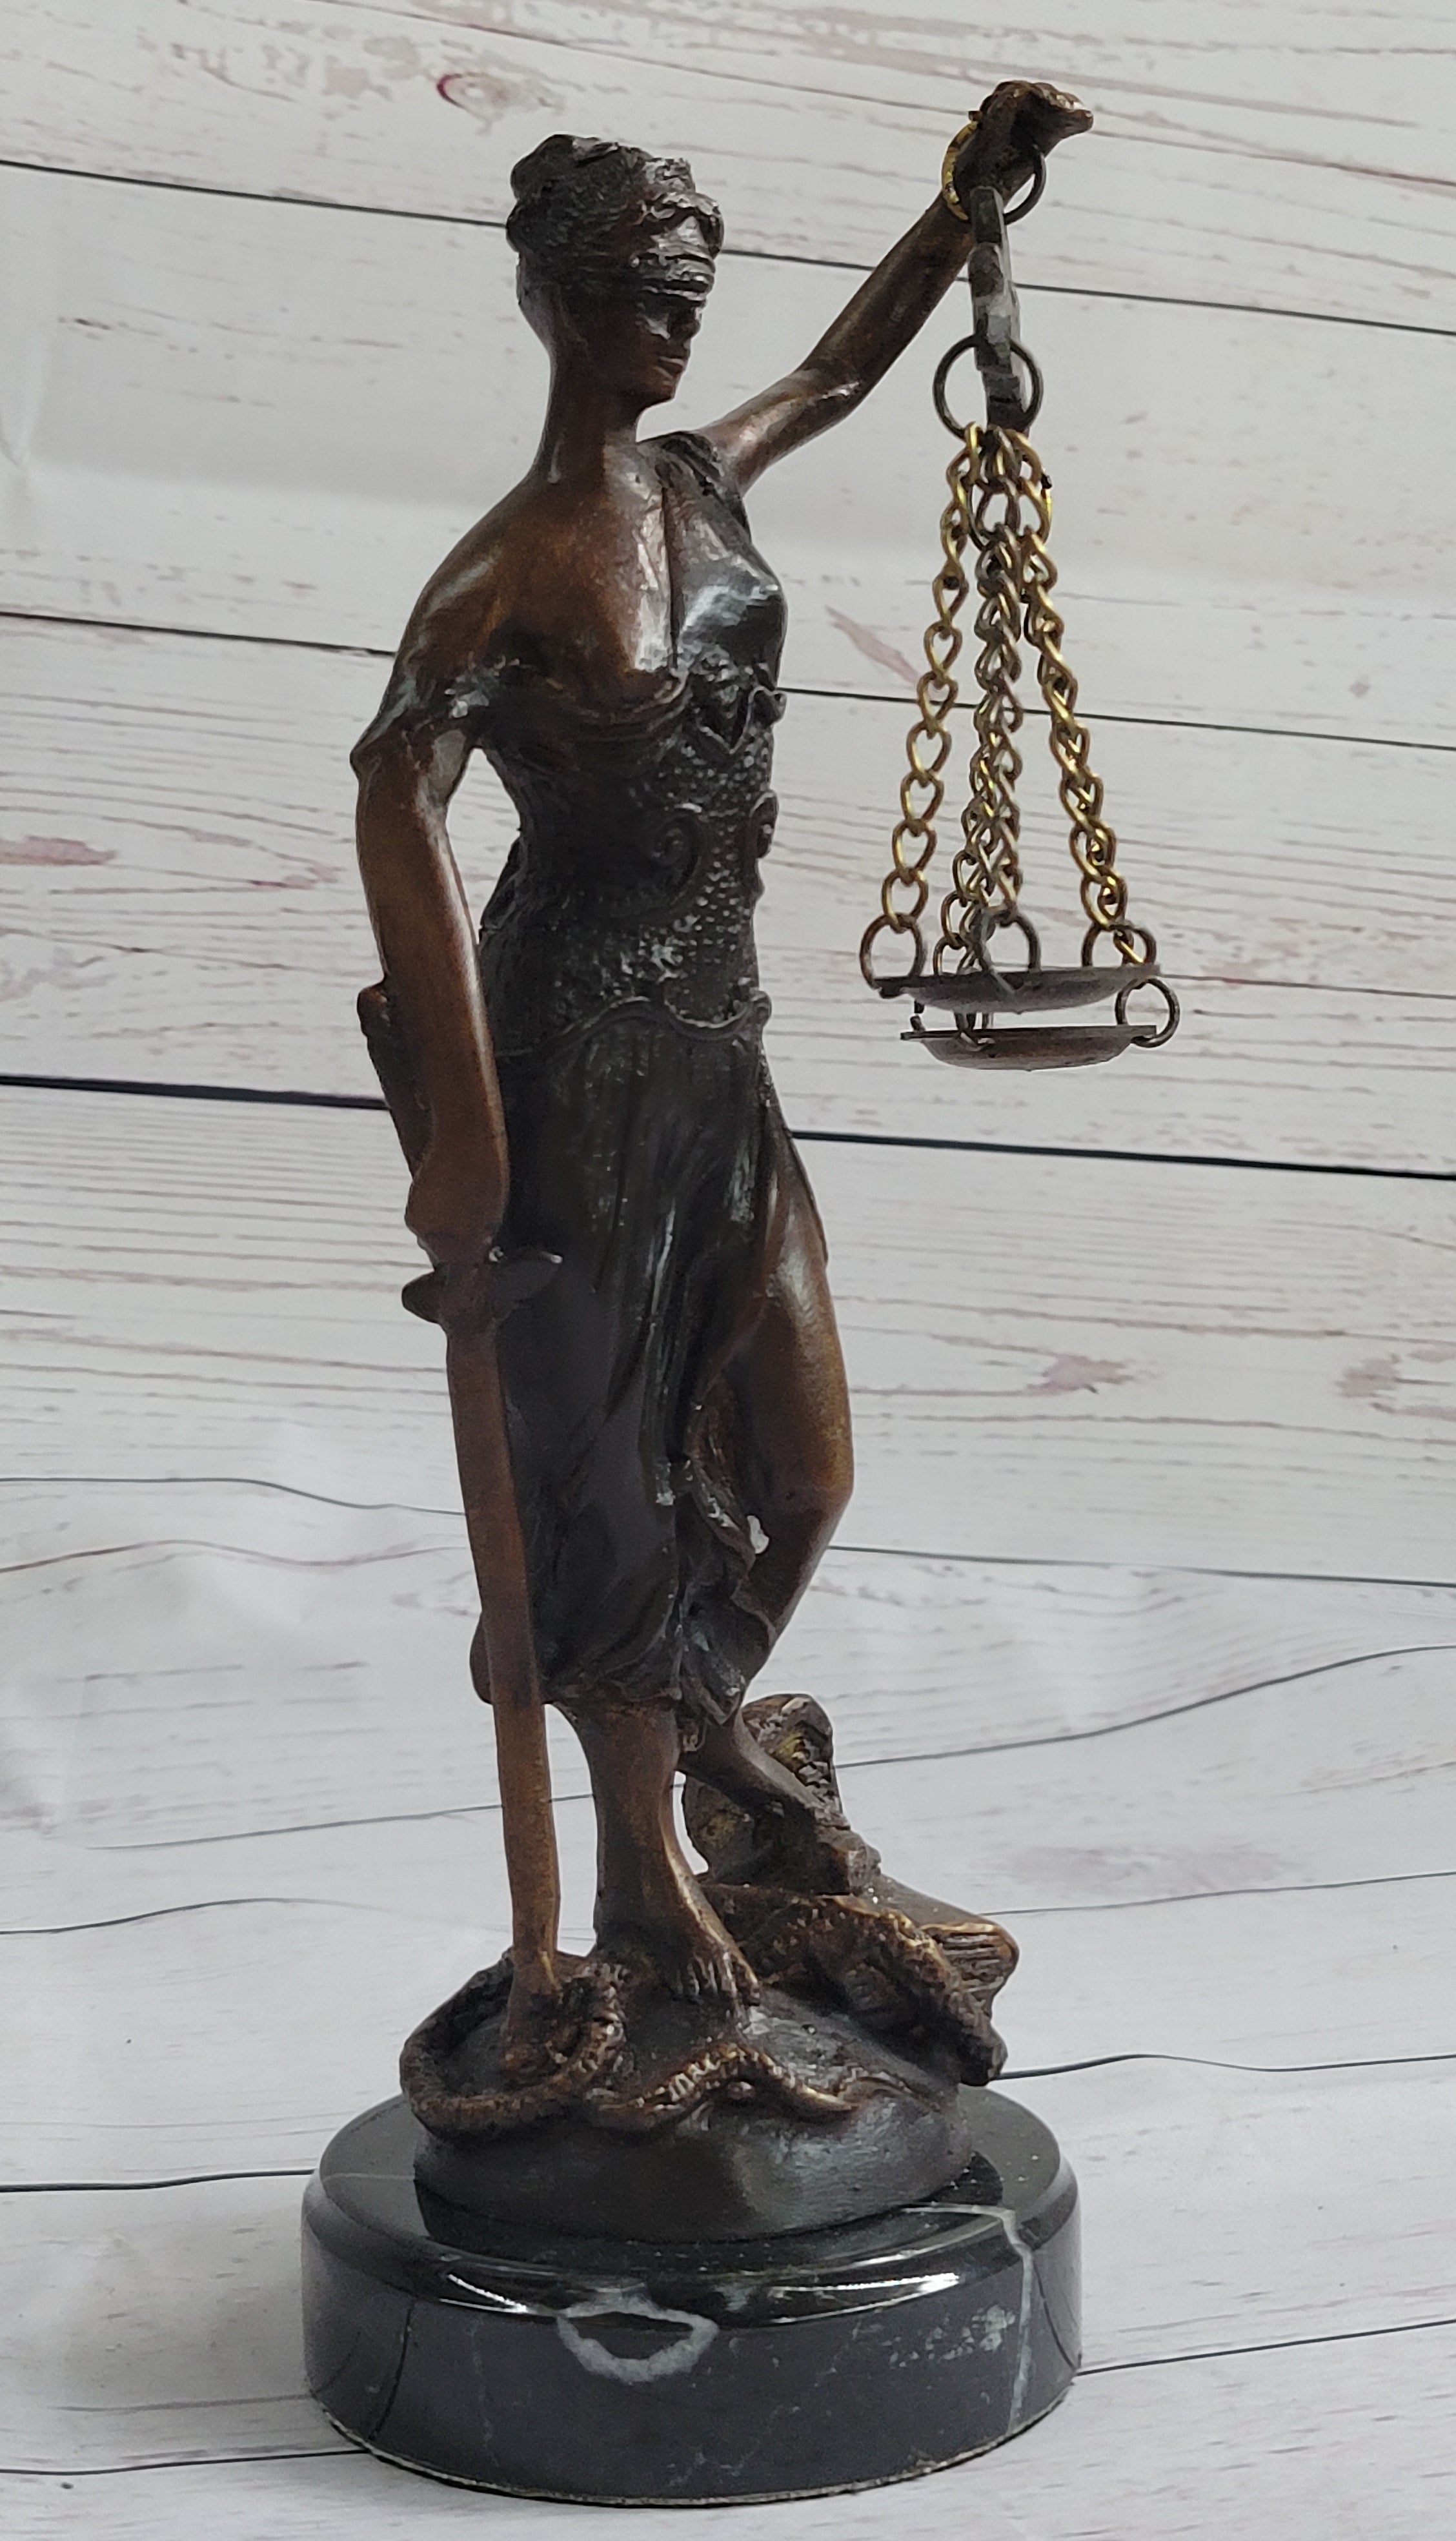 10" Tall BRONZE BLIND JUSTICE LAW MARBLE STATUE LADY SCALE Sculpture Nouveau Art